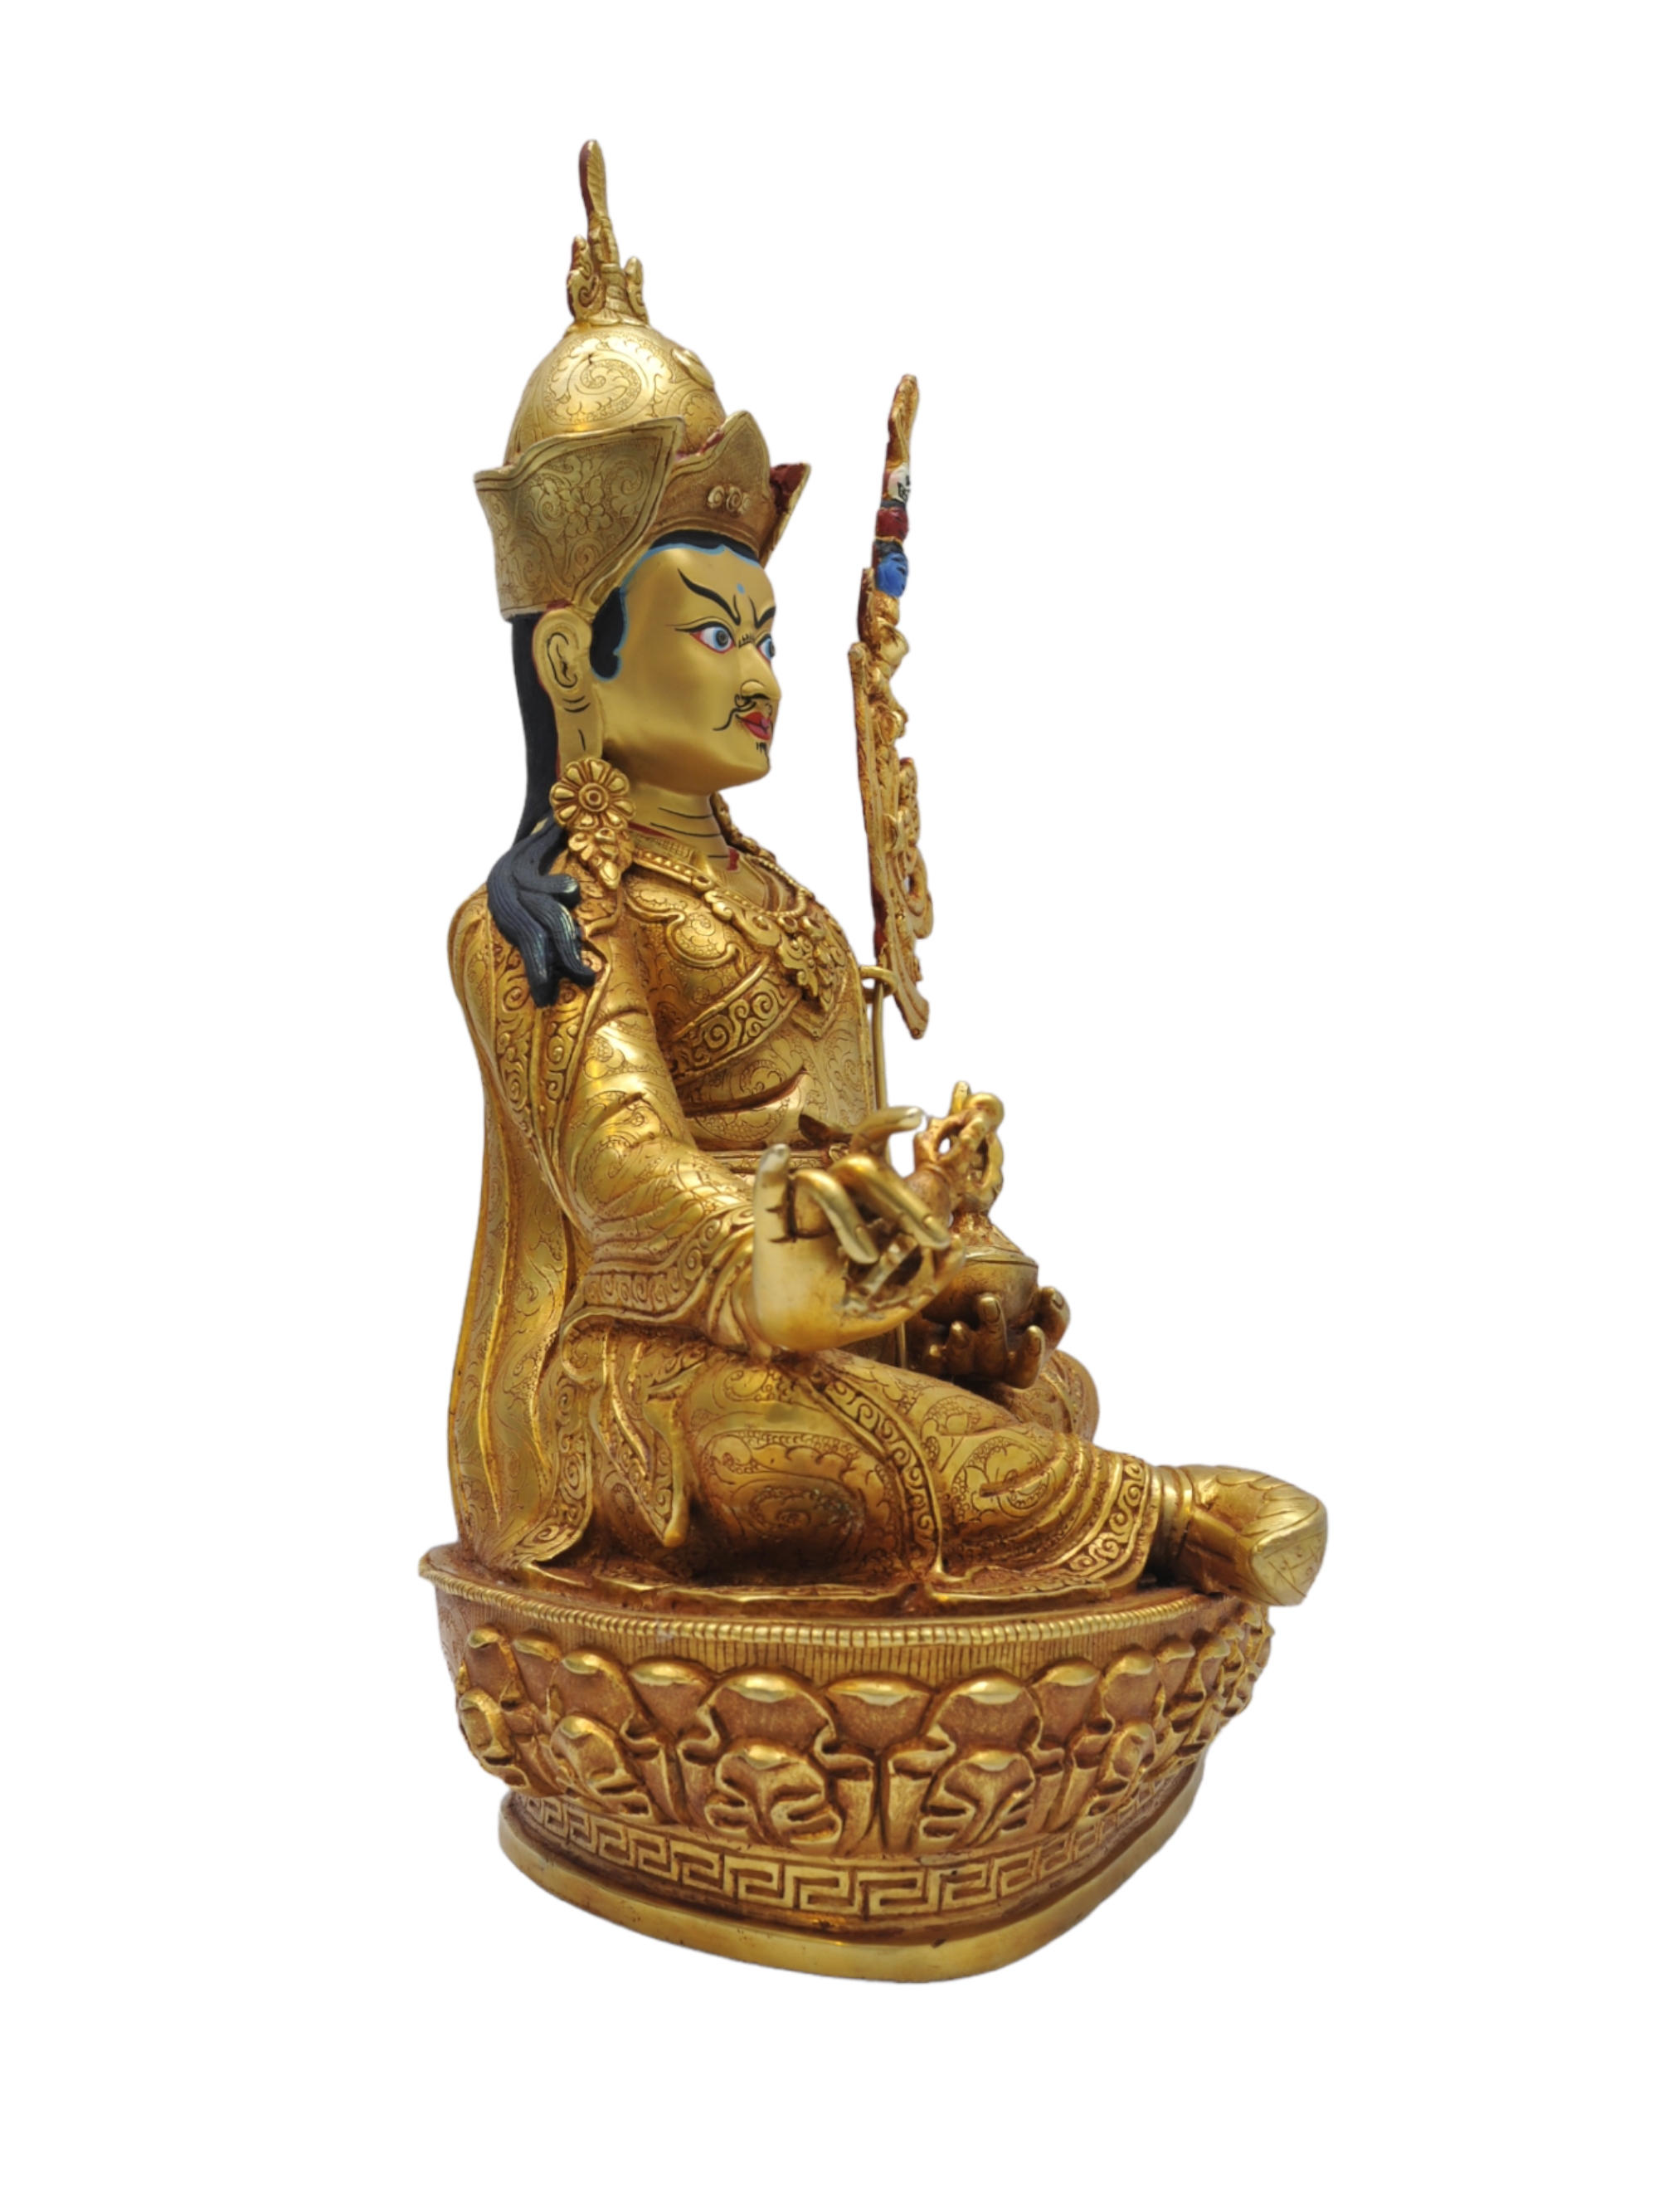 Buddhist Statue Of padmasambhava, guru Rinpoche, Gold Plated With Face Paint